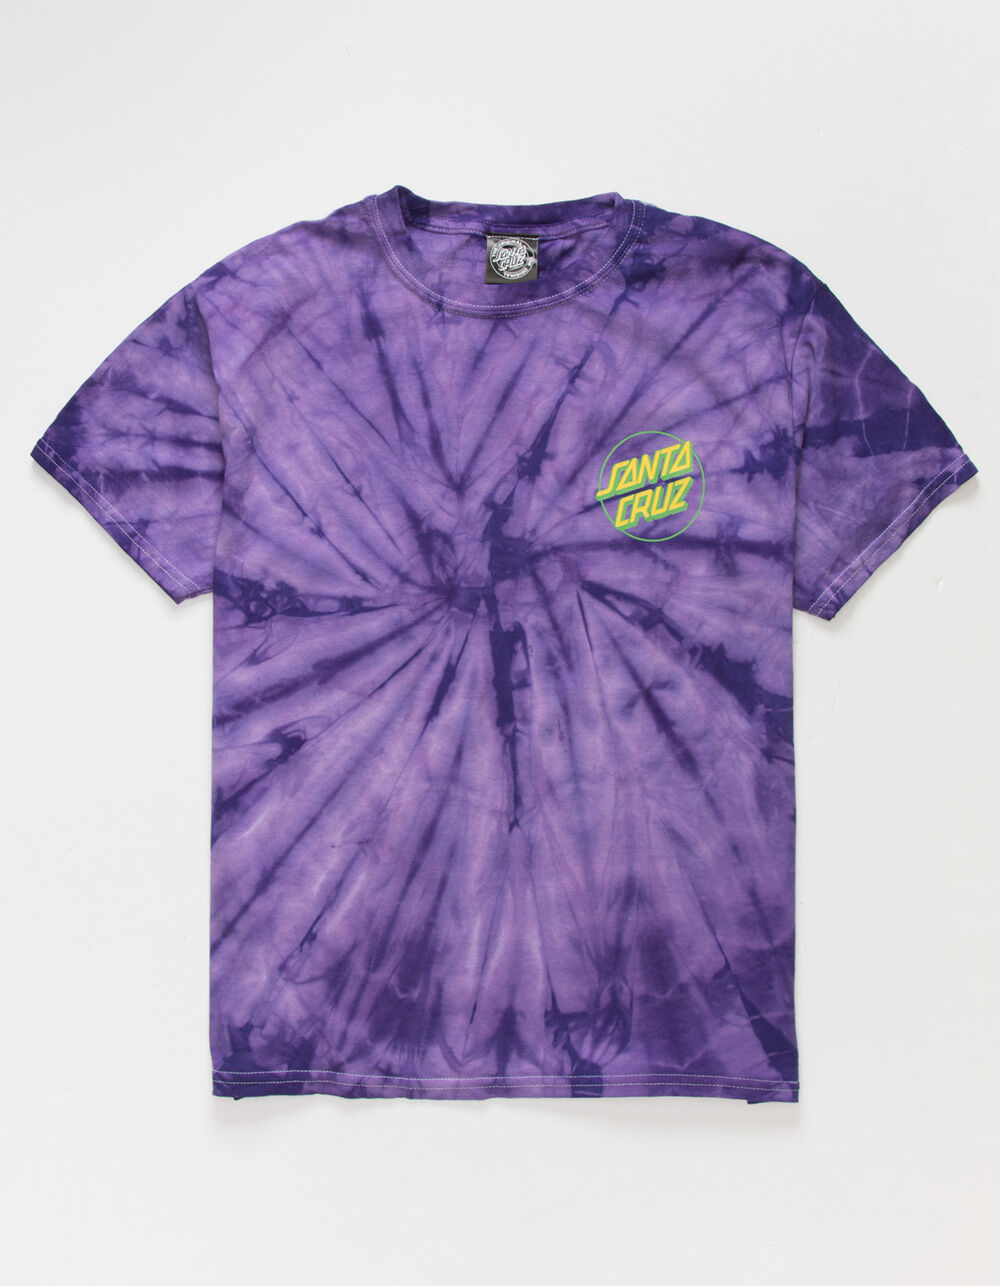 SANTA CRUZ Grip Dot Boys T-Shirt - PURPLE | Tillys